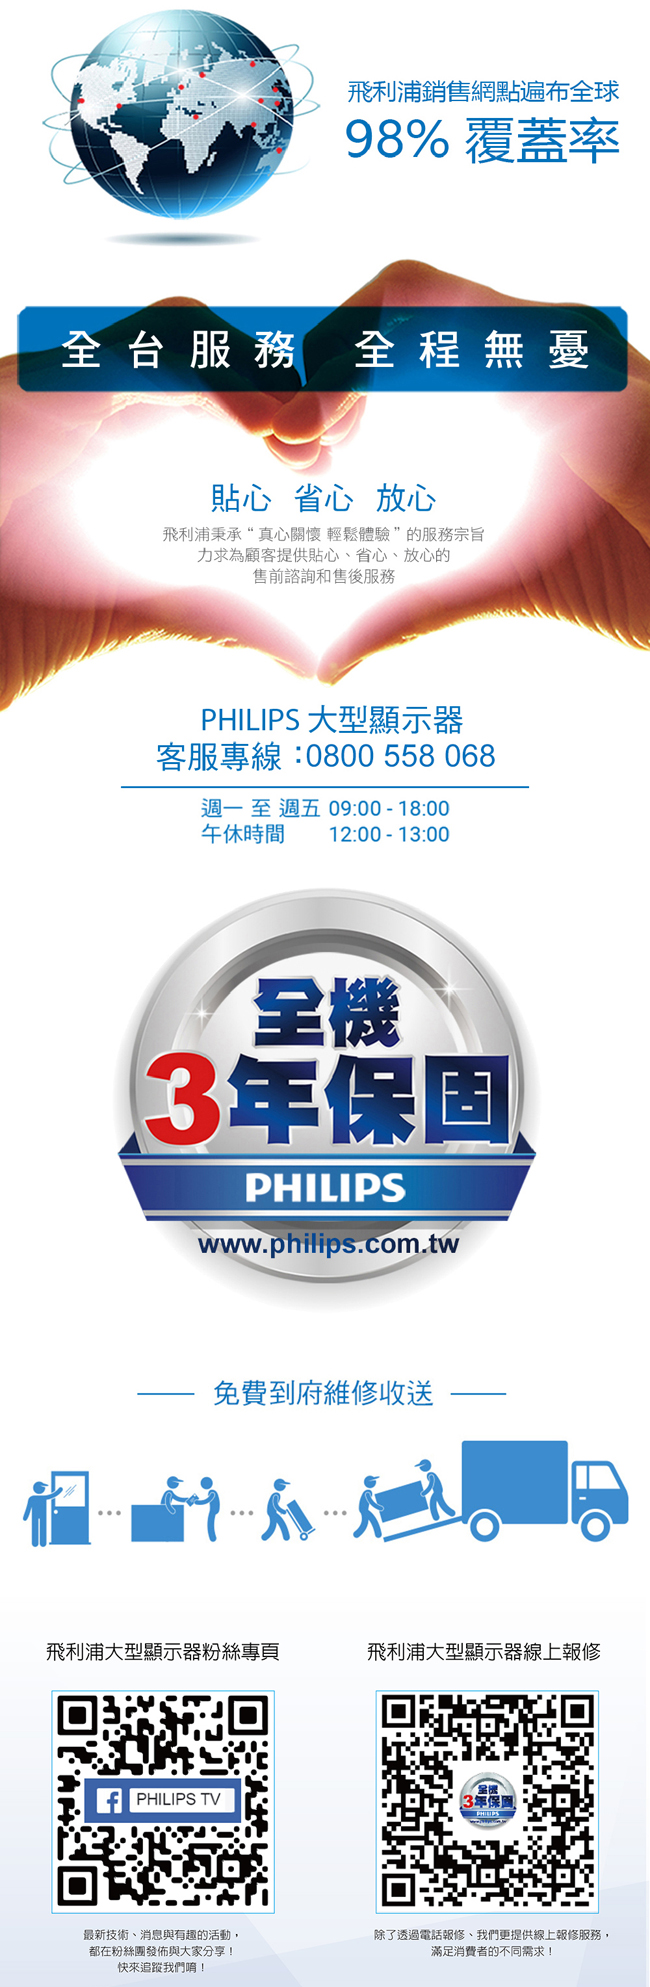 PHILIPS飛利浦 55吋 4K聯網液晶顯示器+視訊盒 55PUH7052